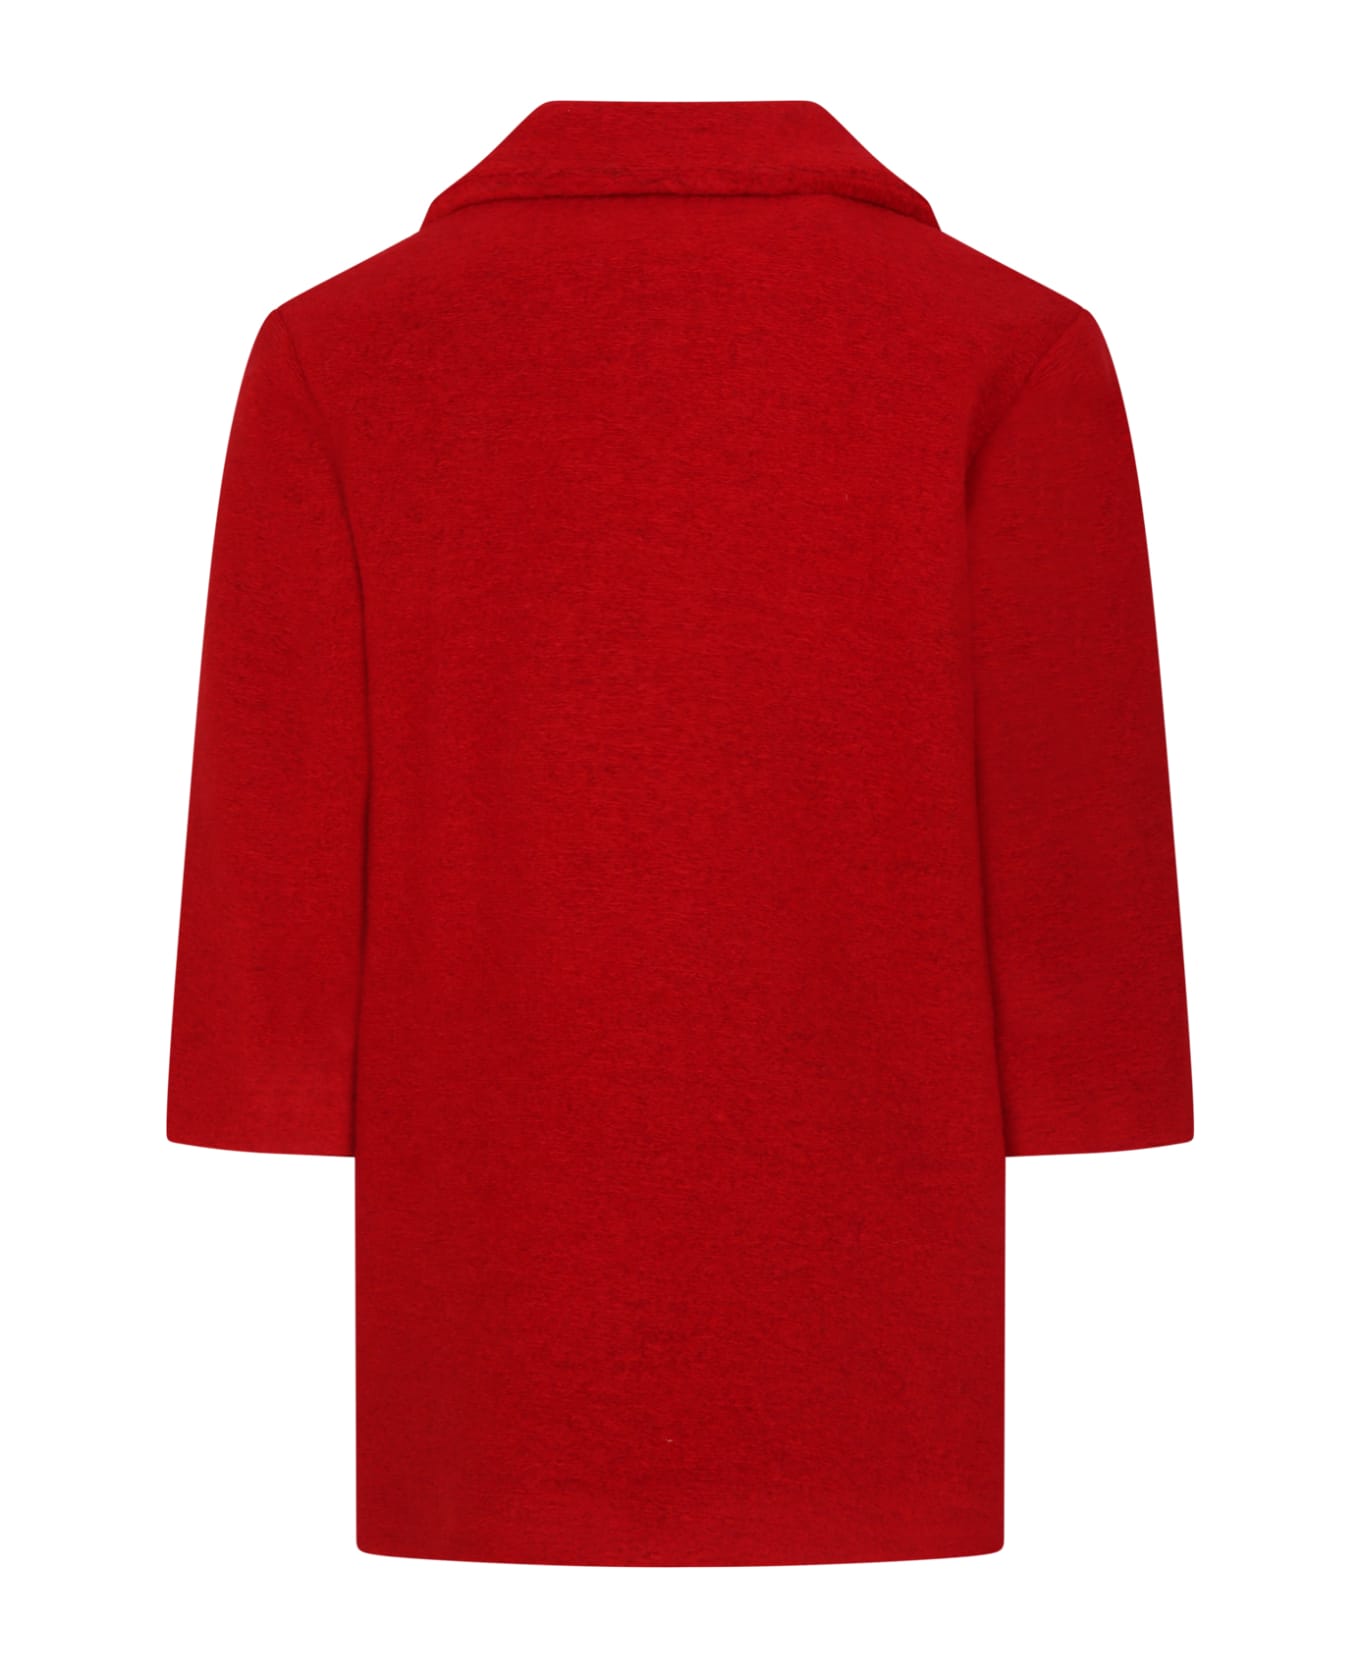 Monnalisa Red Coat For Girl - Red